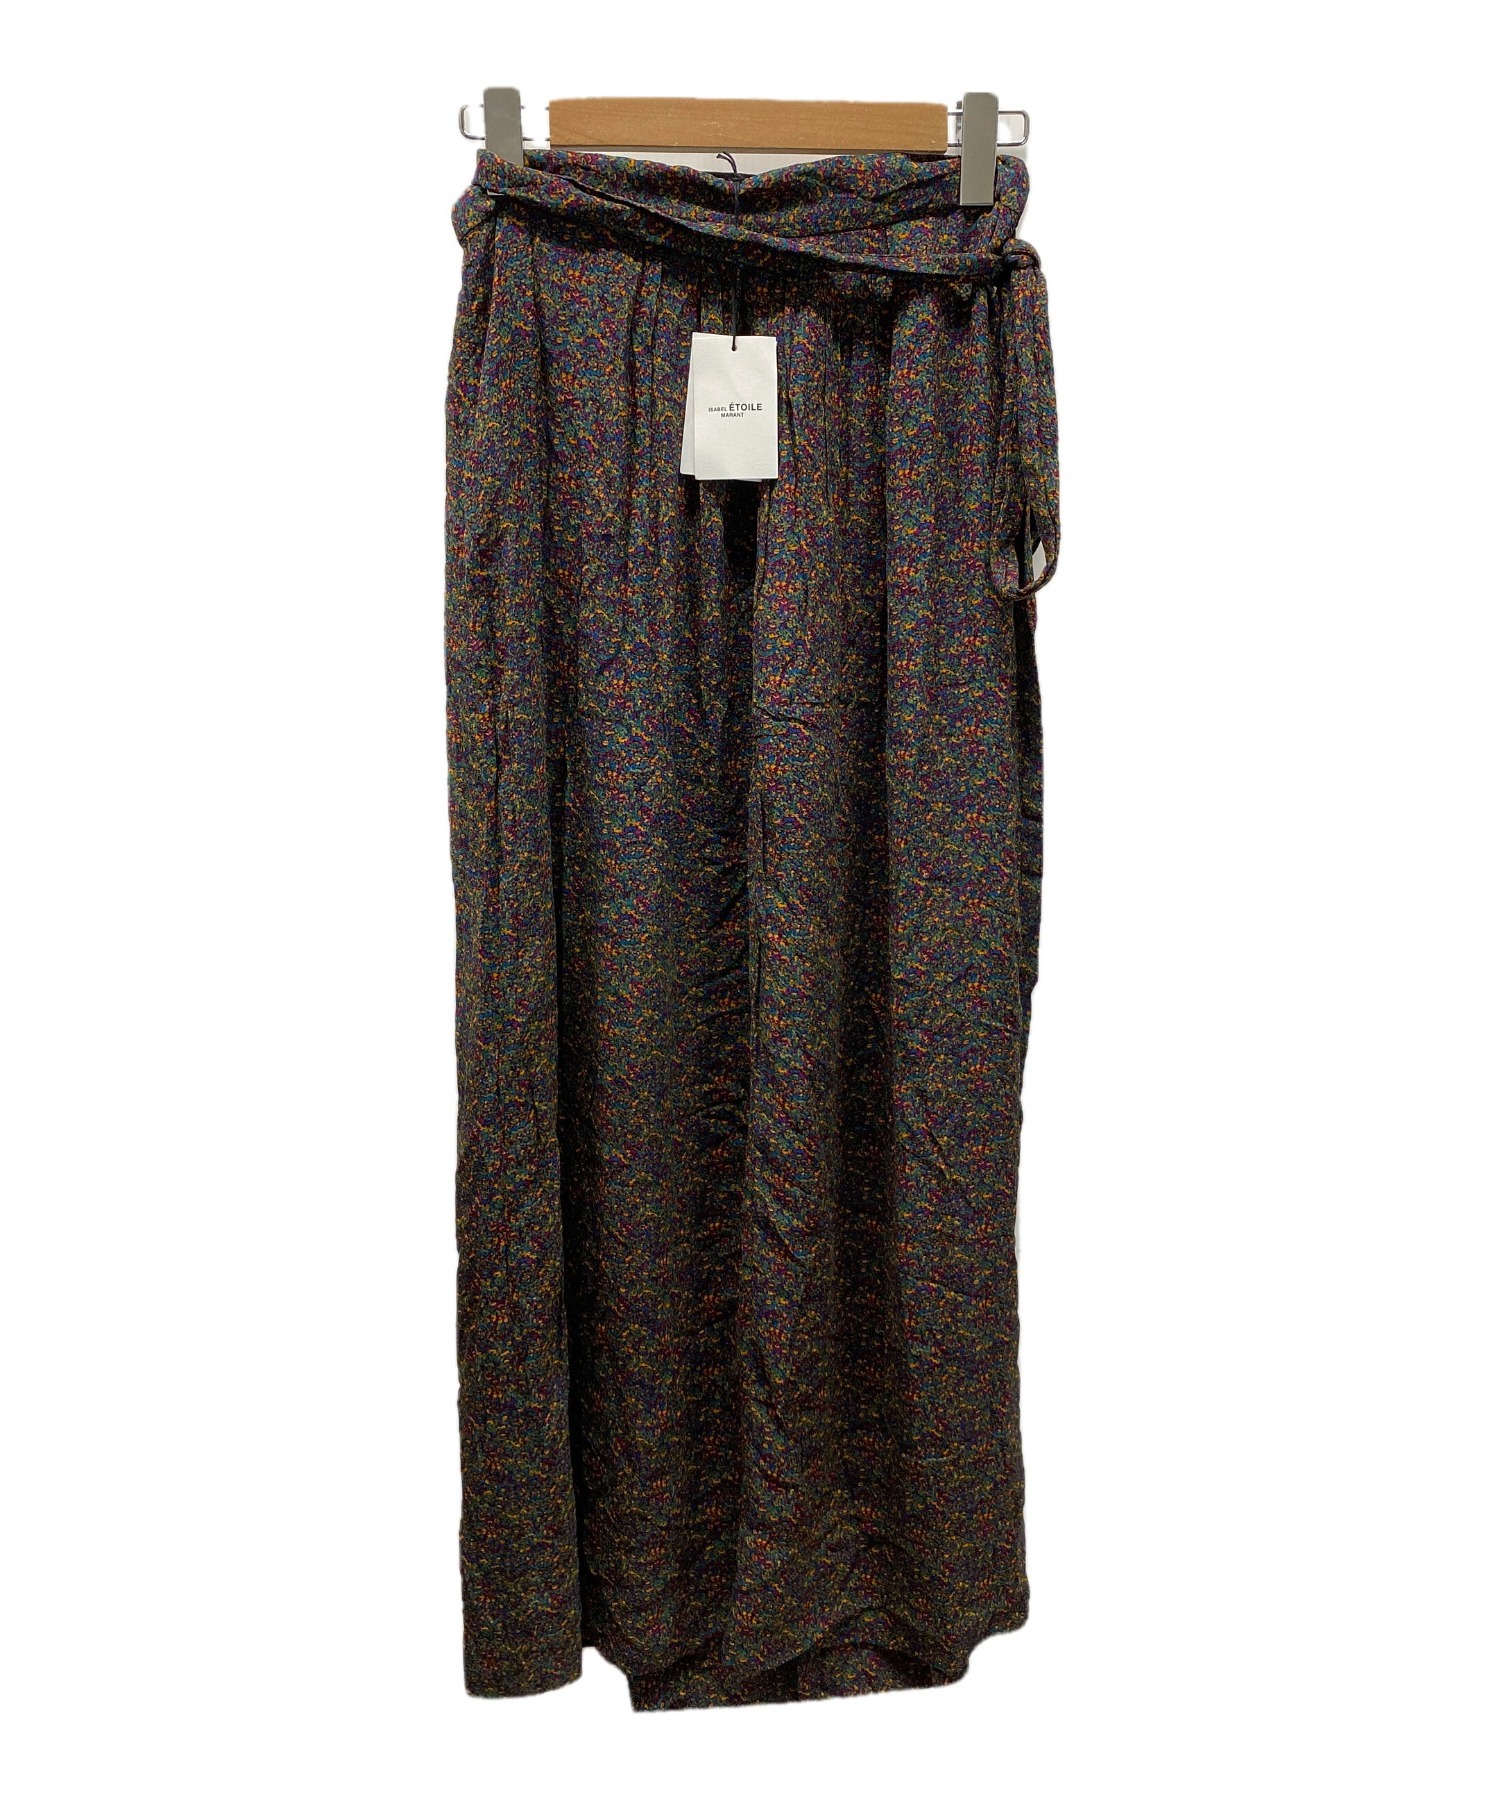 ISABEL MARANT ETOILE (イザベルマランエトワール) ラップスカート パープル サイズ:34